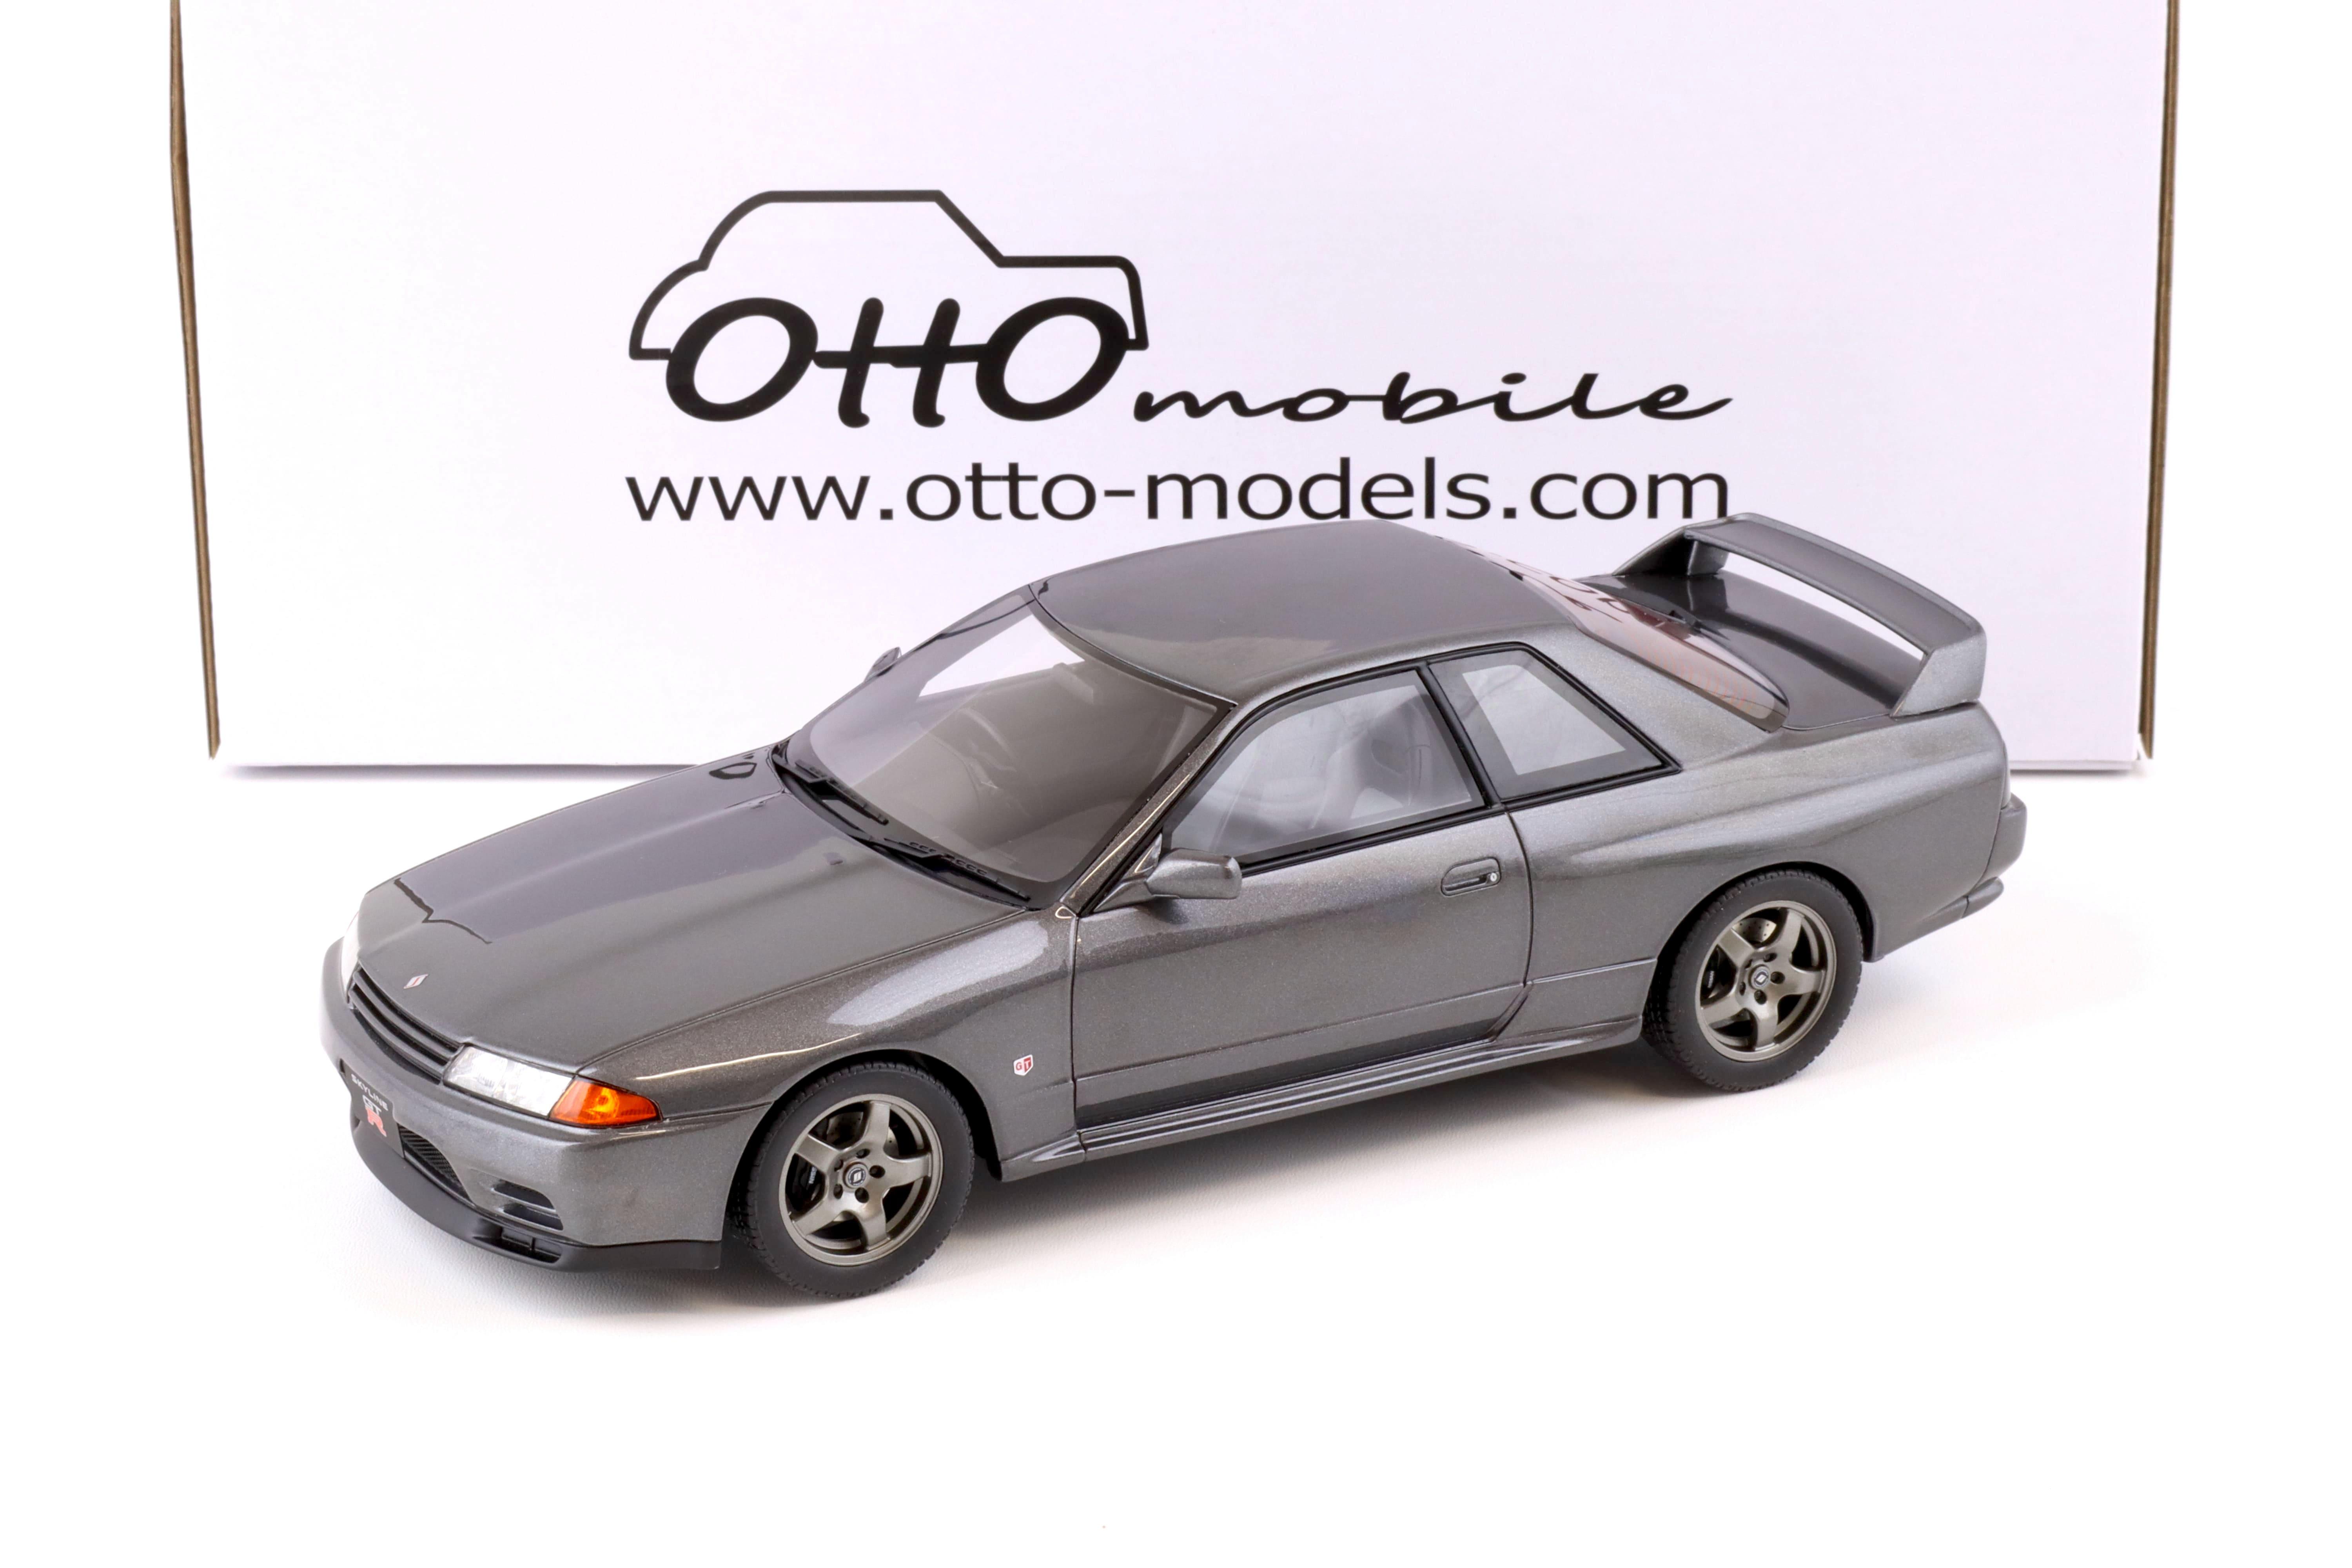 1:18 OTTO mobile OT411 Nissan Skyline GT-R BNR32 grey metallic 1993